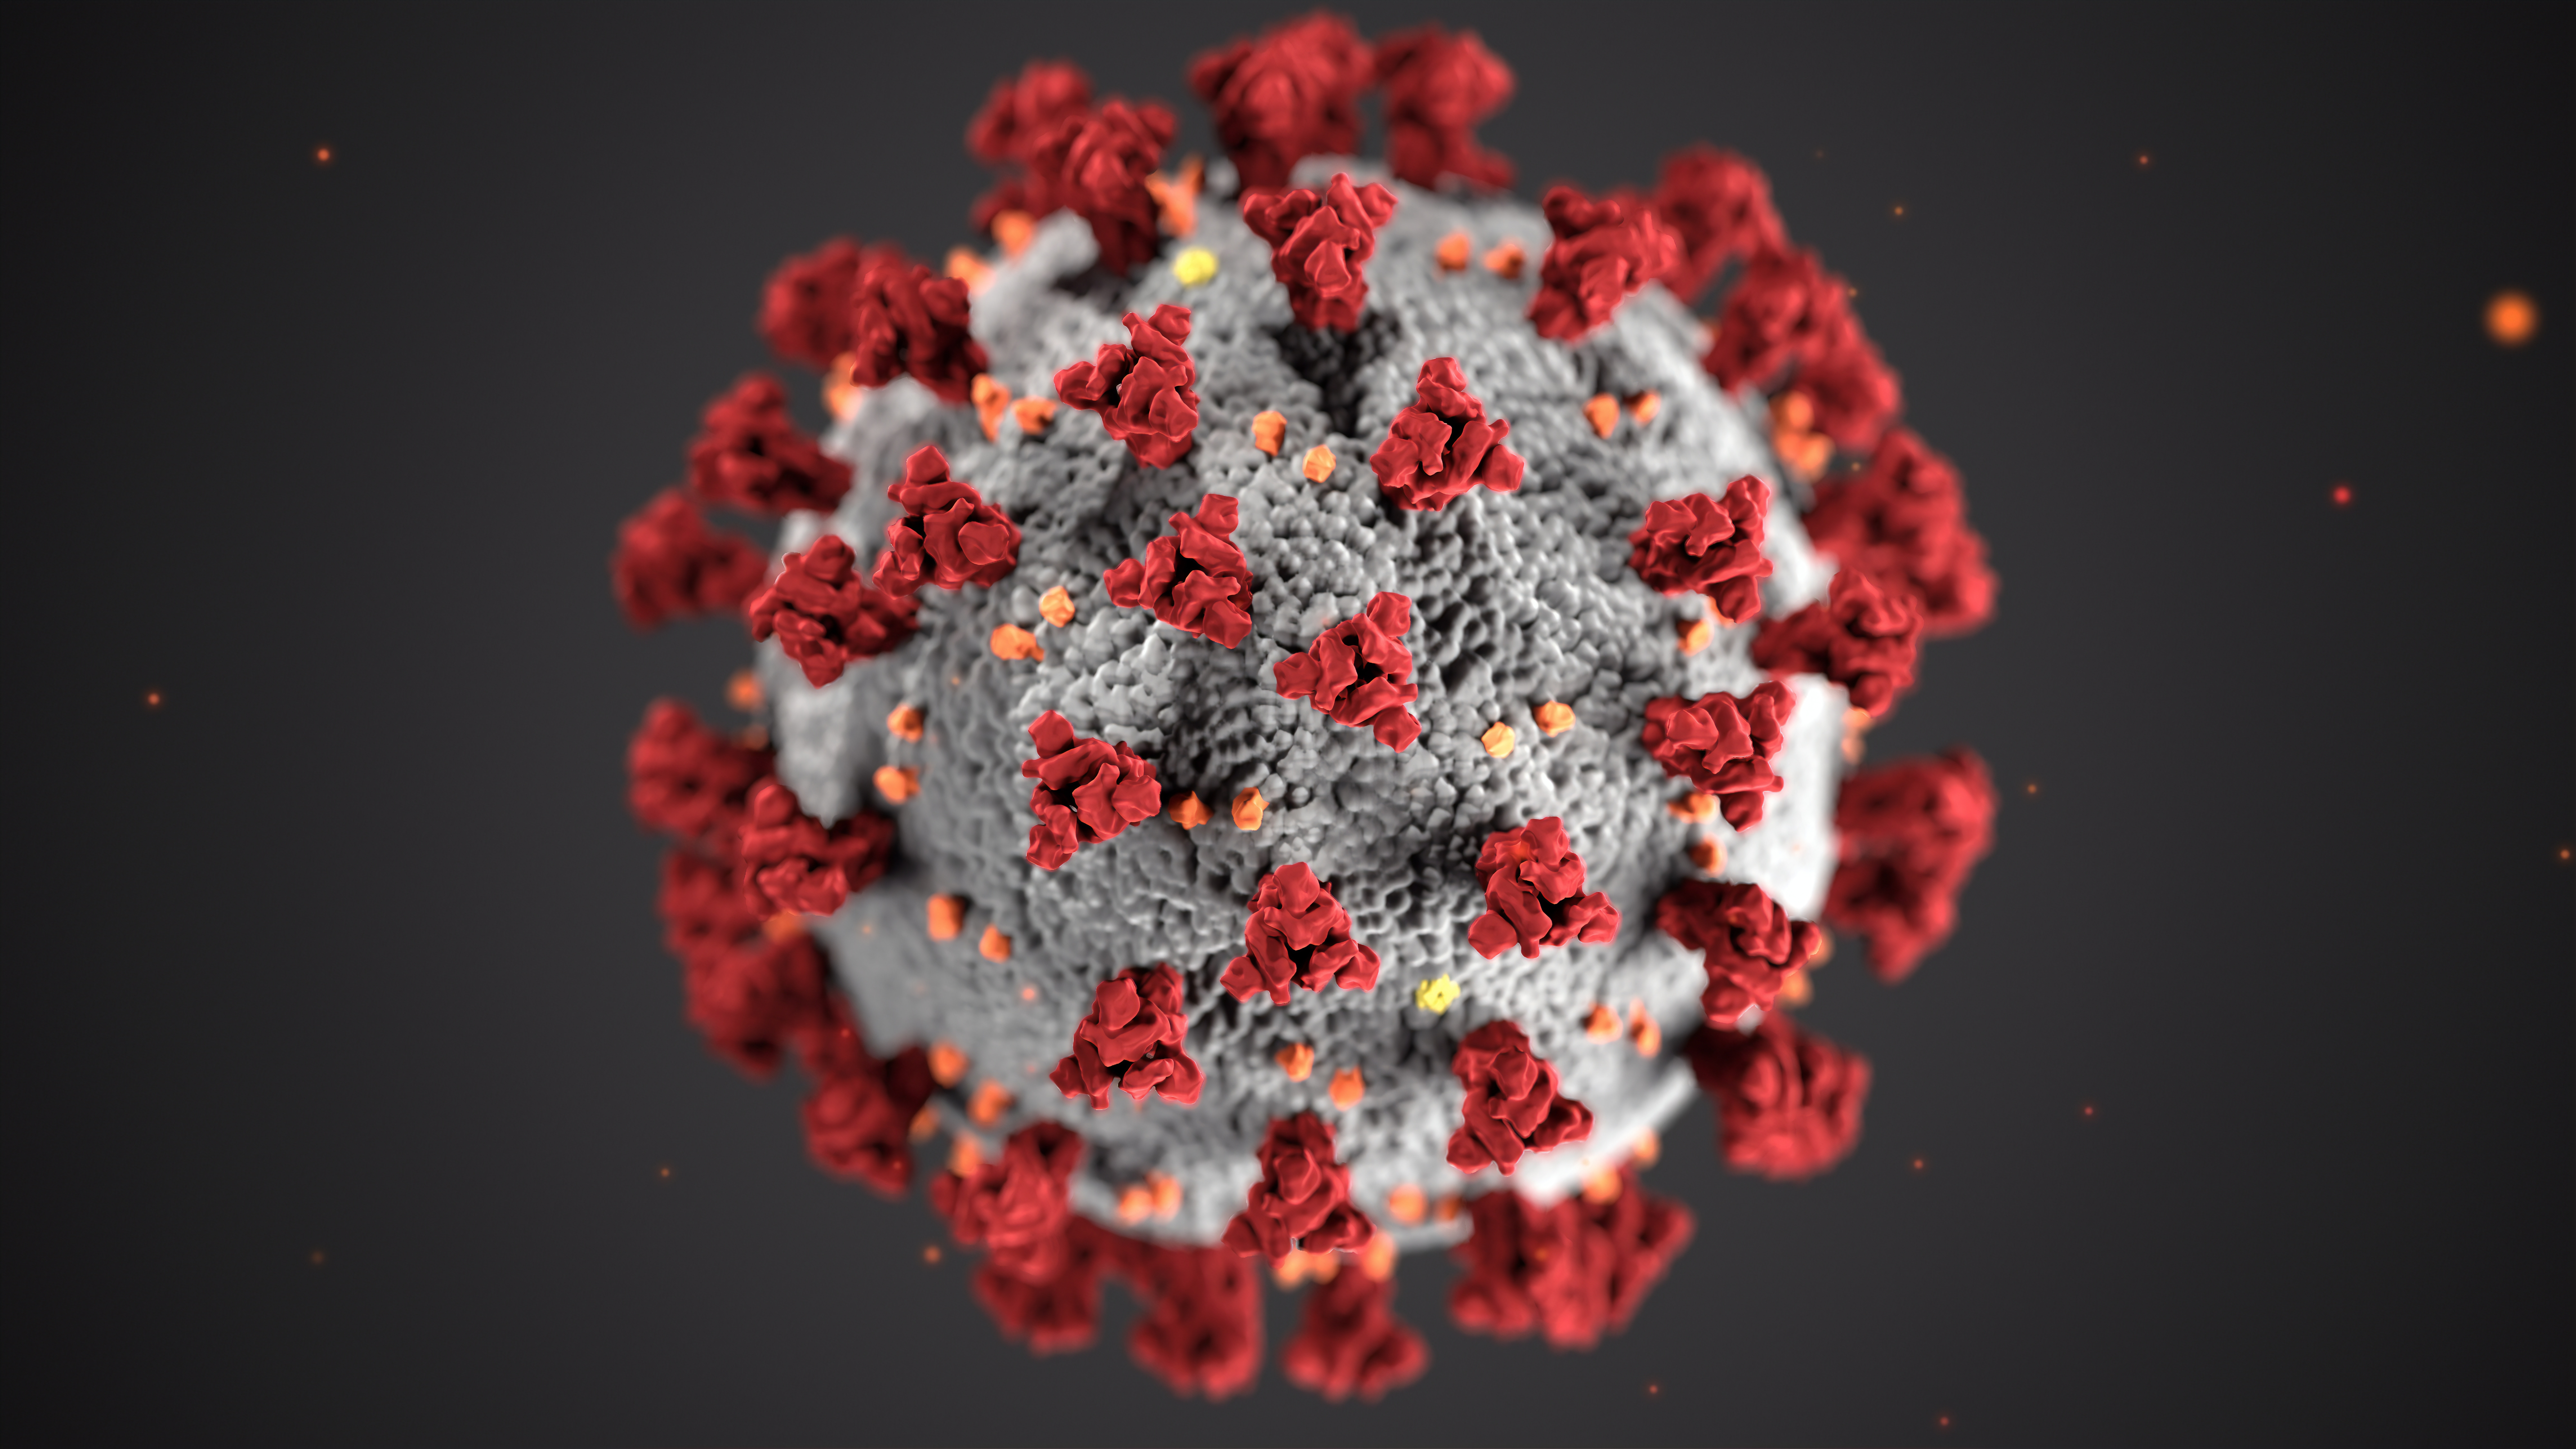 Fitesa Introduces Product that Inactivates Coronavirus